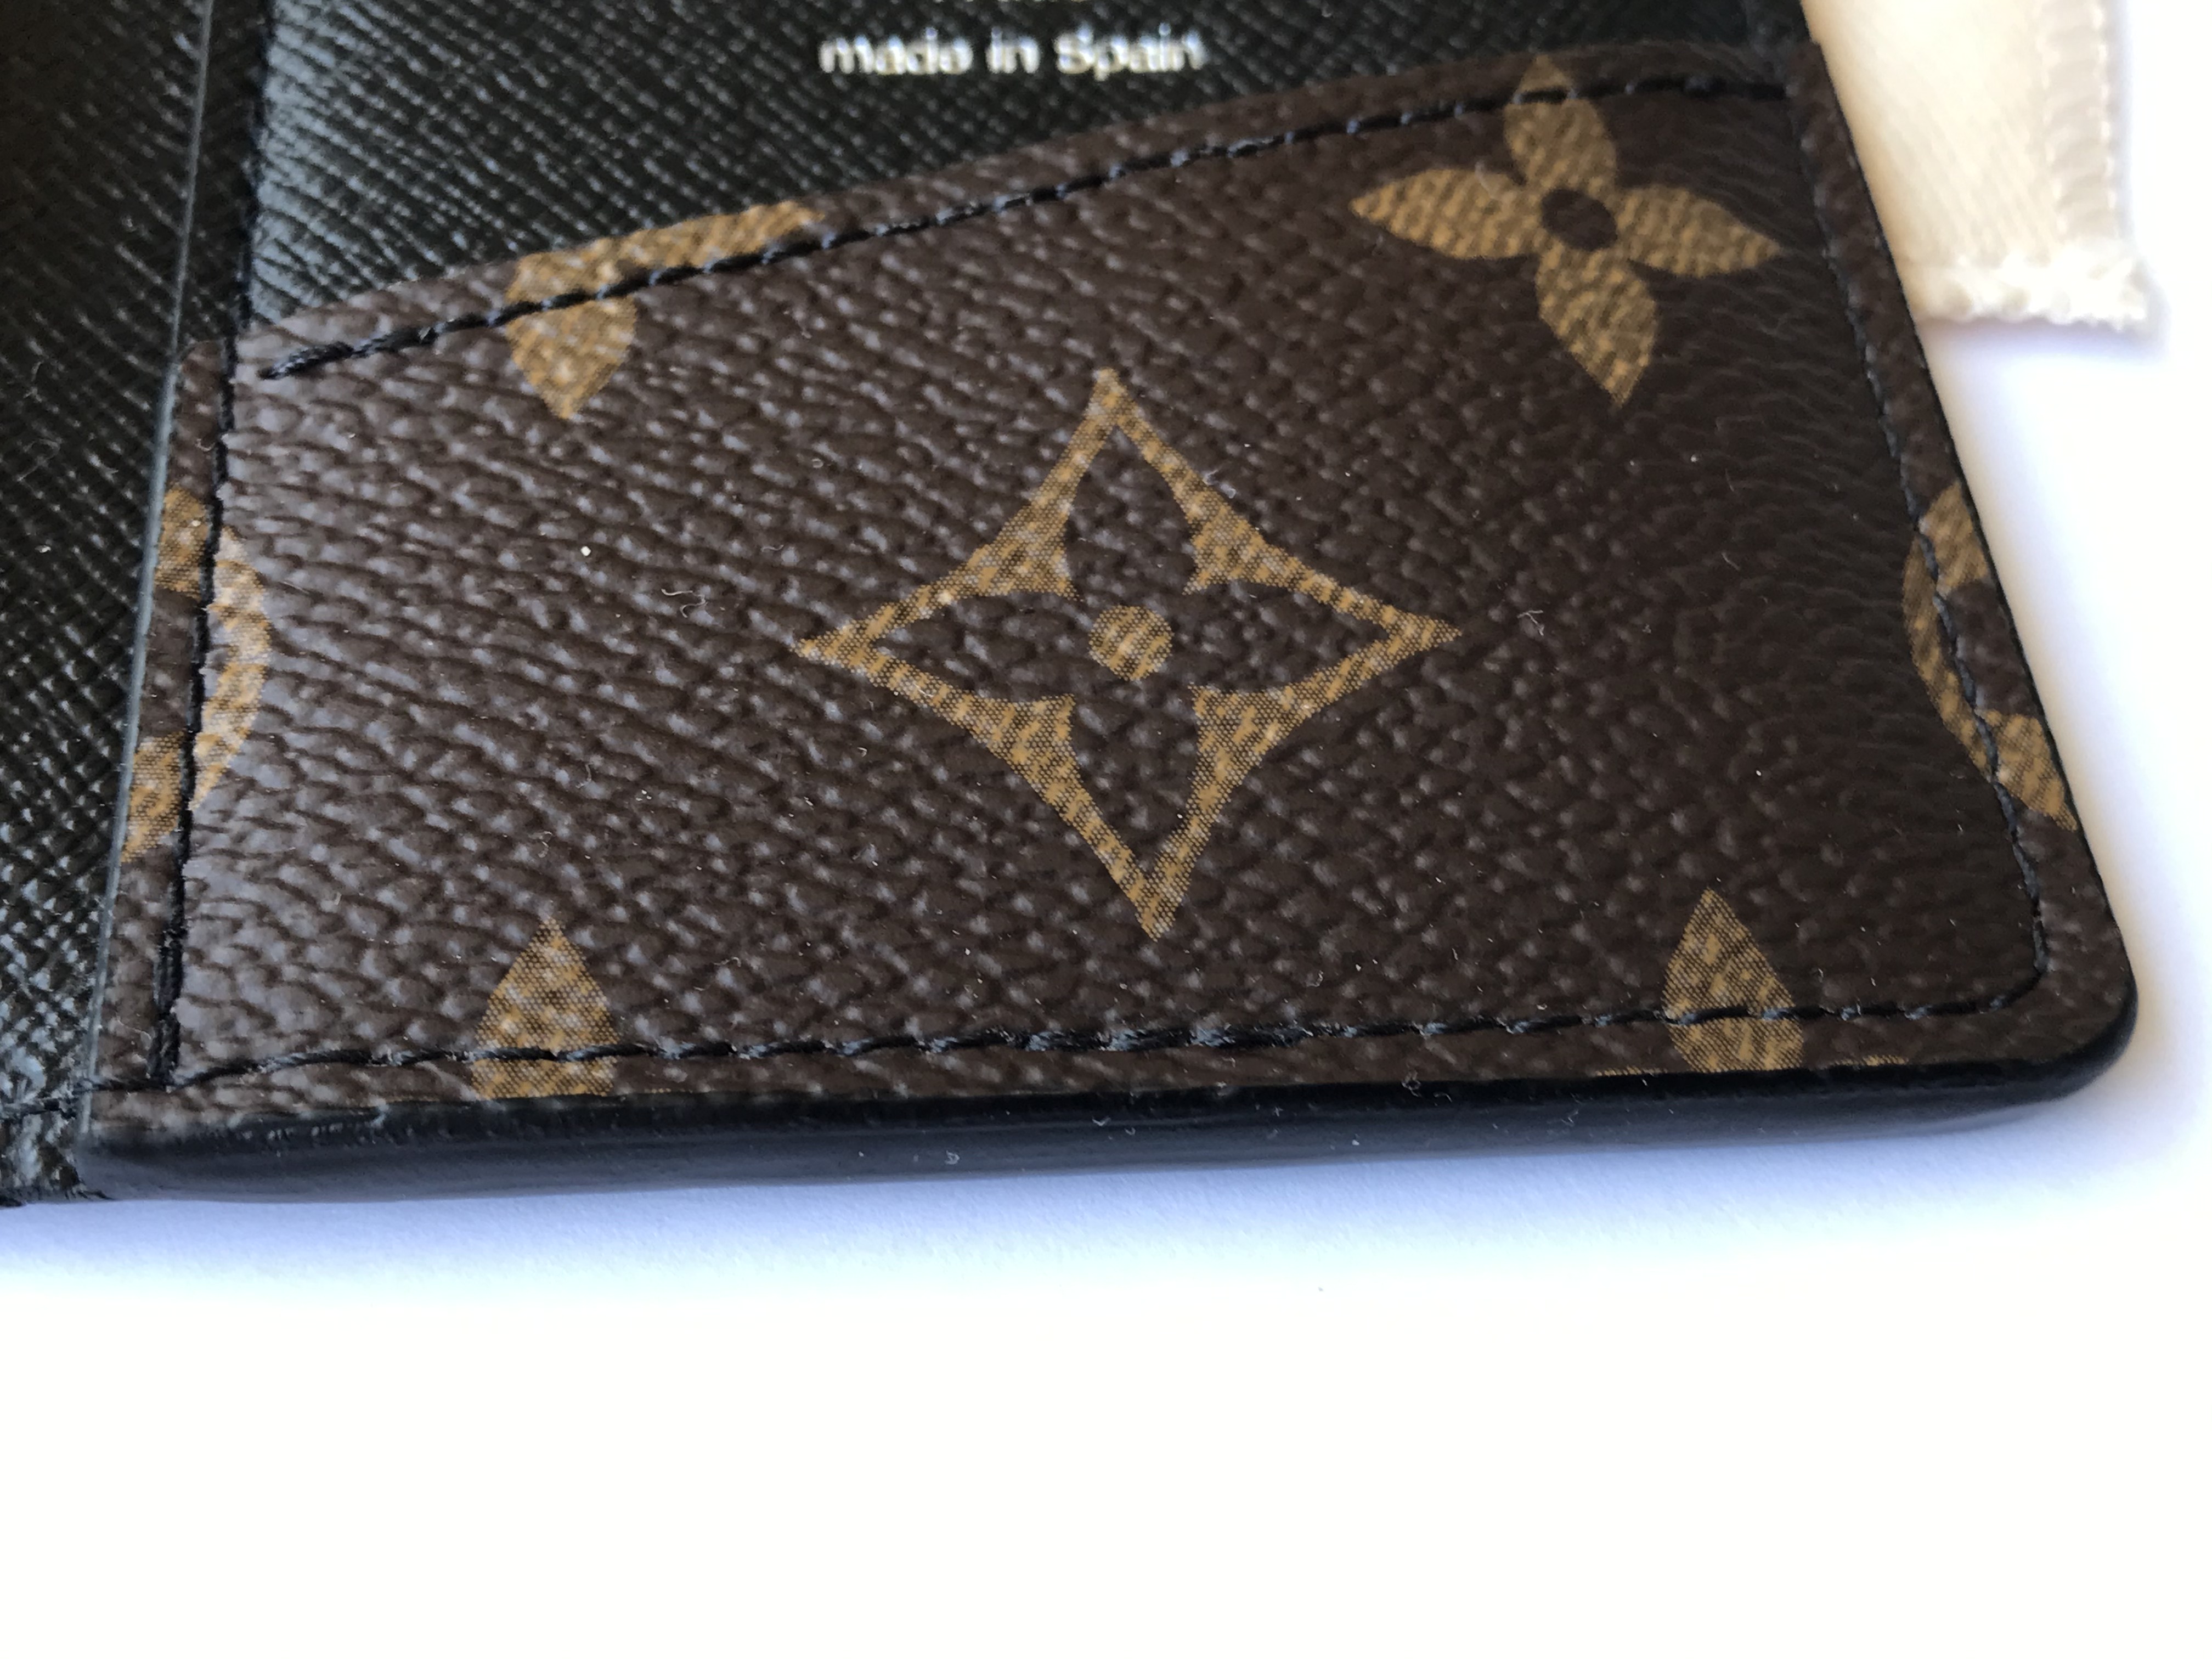 Louis Vuitton Monogram Macassar Pocket Organiser 481721